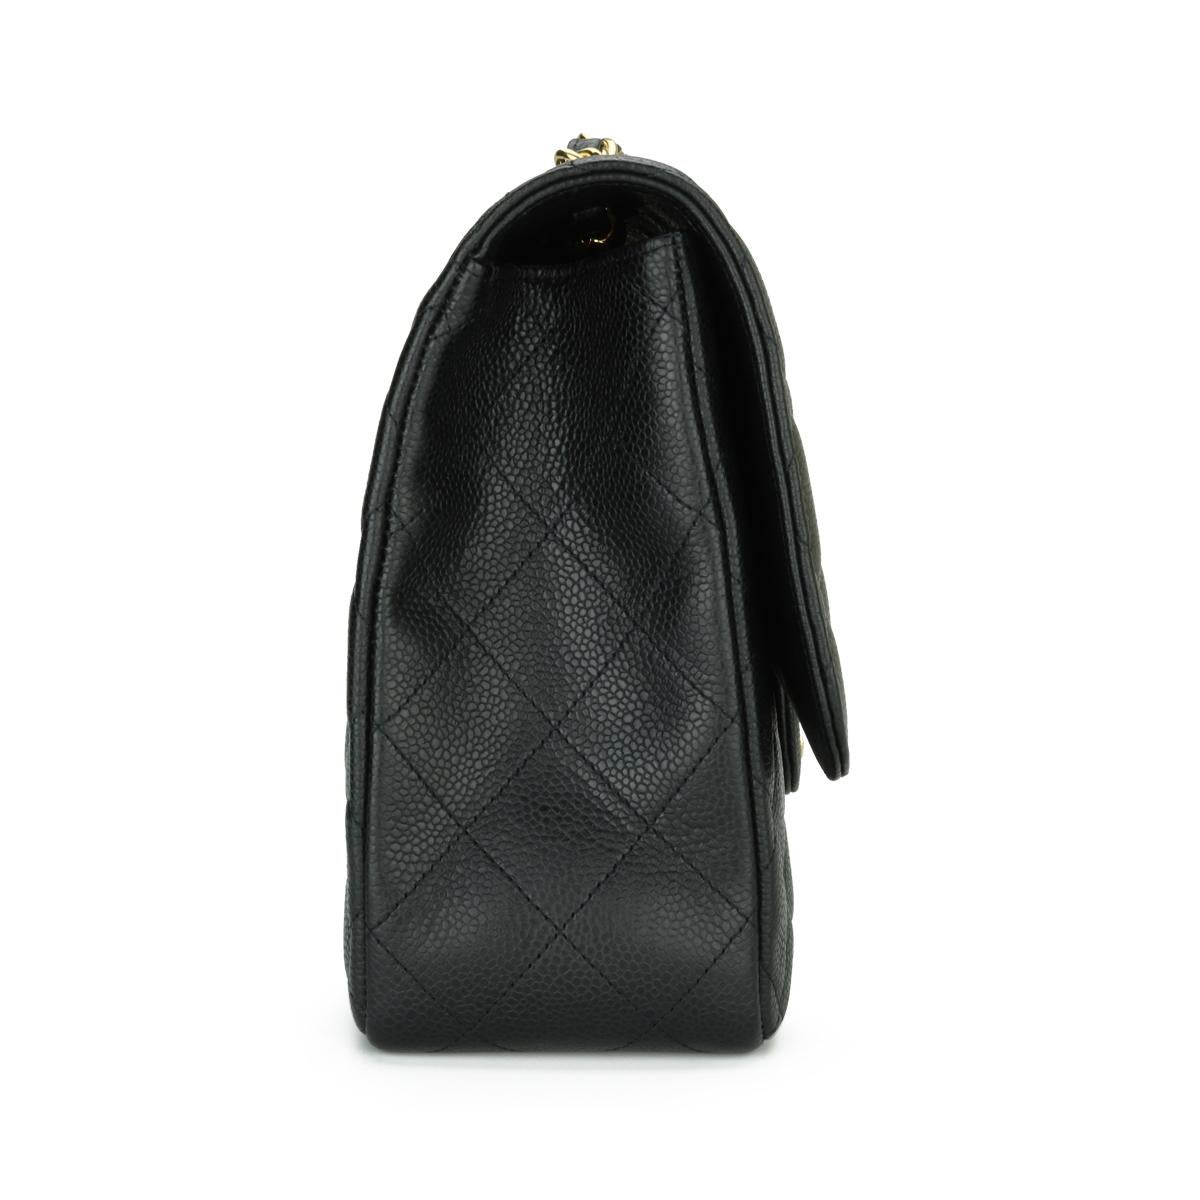 CHANEL Single Flap Jumbo Bag Black Caviar with Gold Hardware 2010 For Sale 1